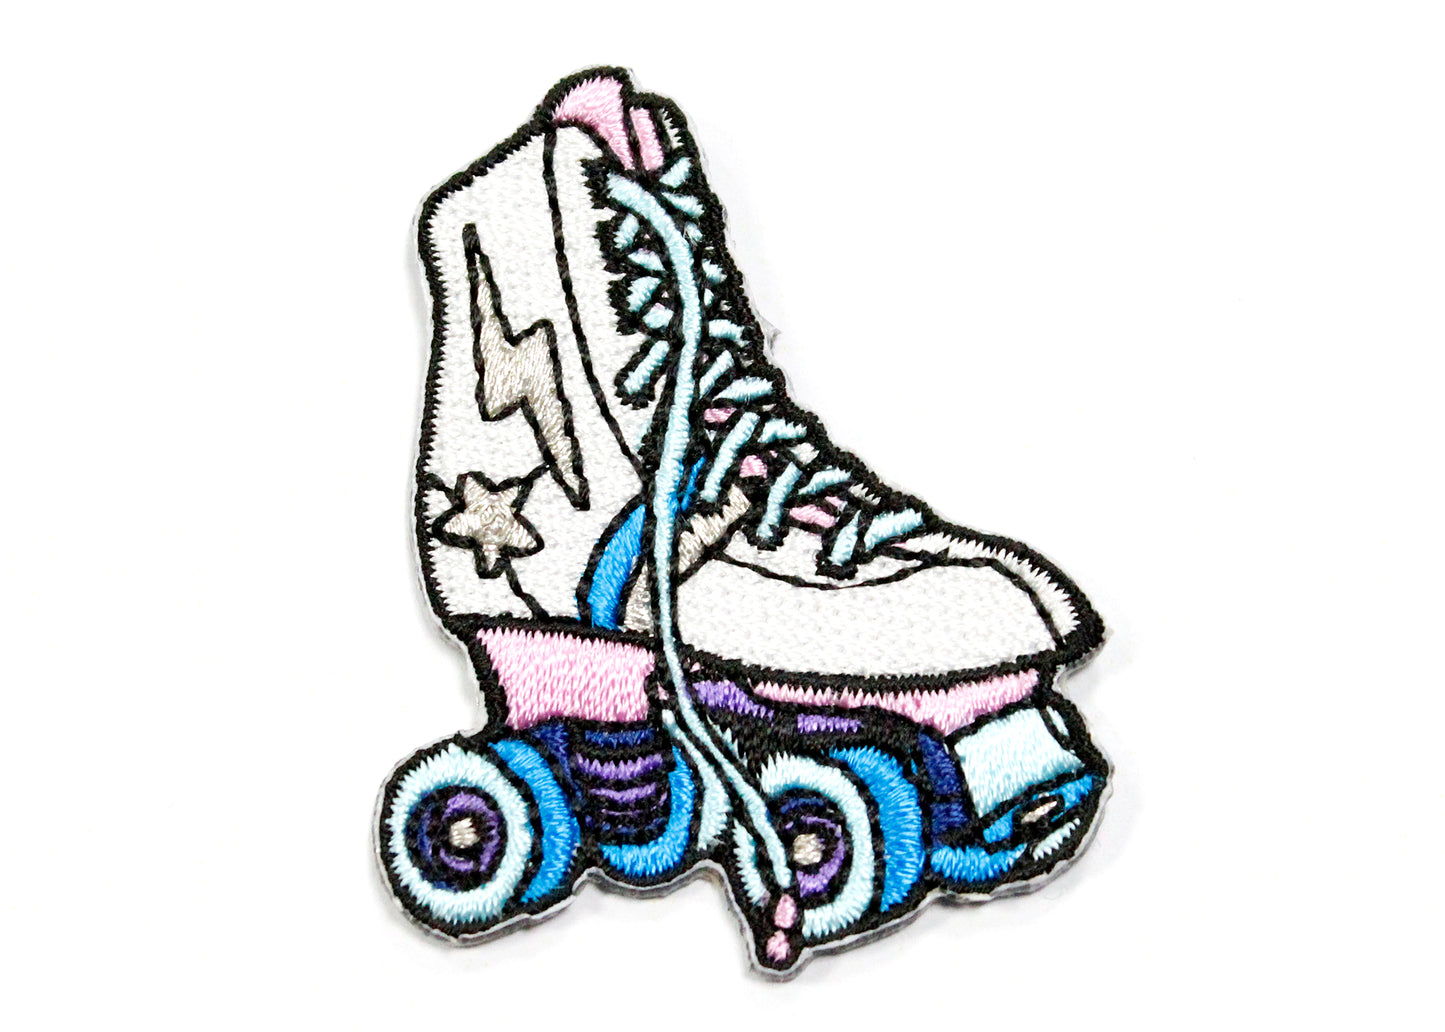 Roller Skate Patch